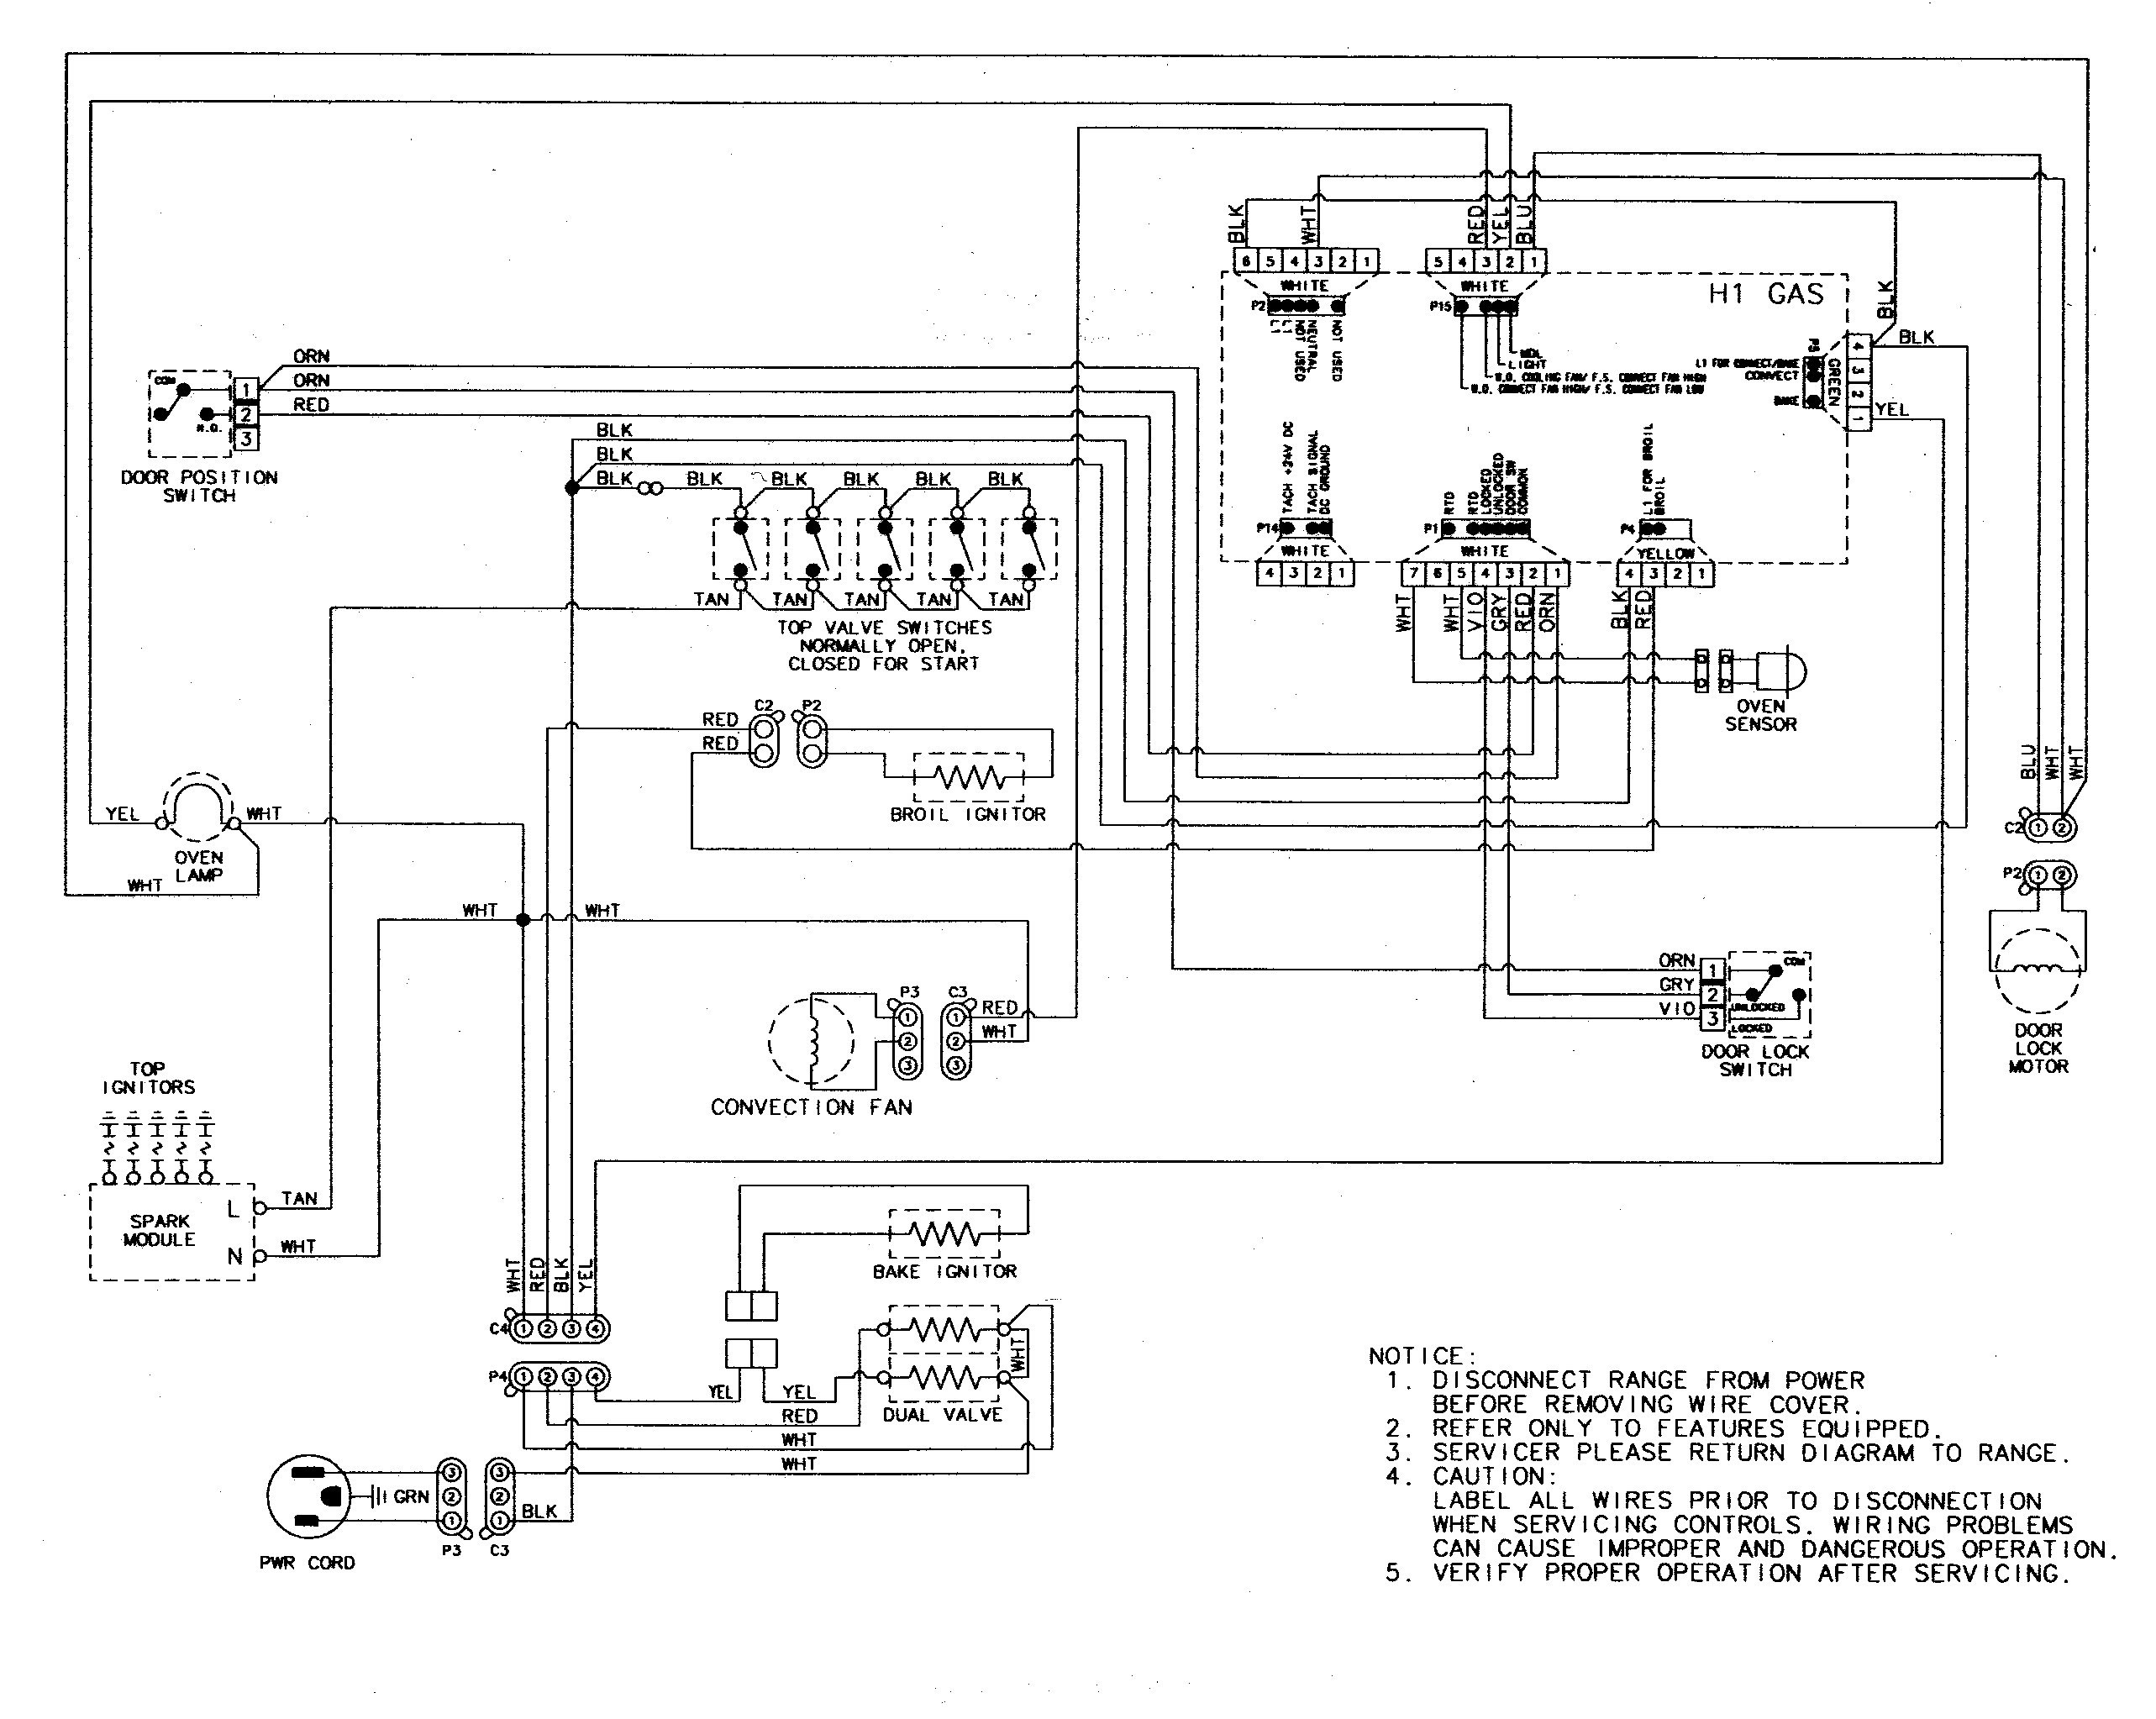 Ge Profile Dishwasher Parts Diagram Breathtaking Ge Washer Wiring Diagram Mod Trusted Wiring Diagrams Of Ge Profile Dishwasher Parts Diagram